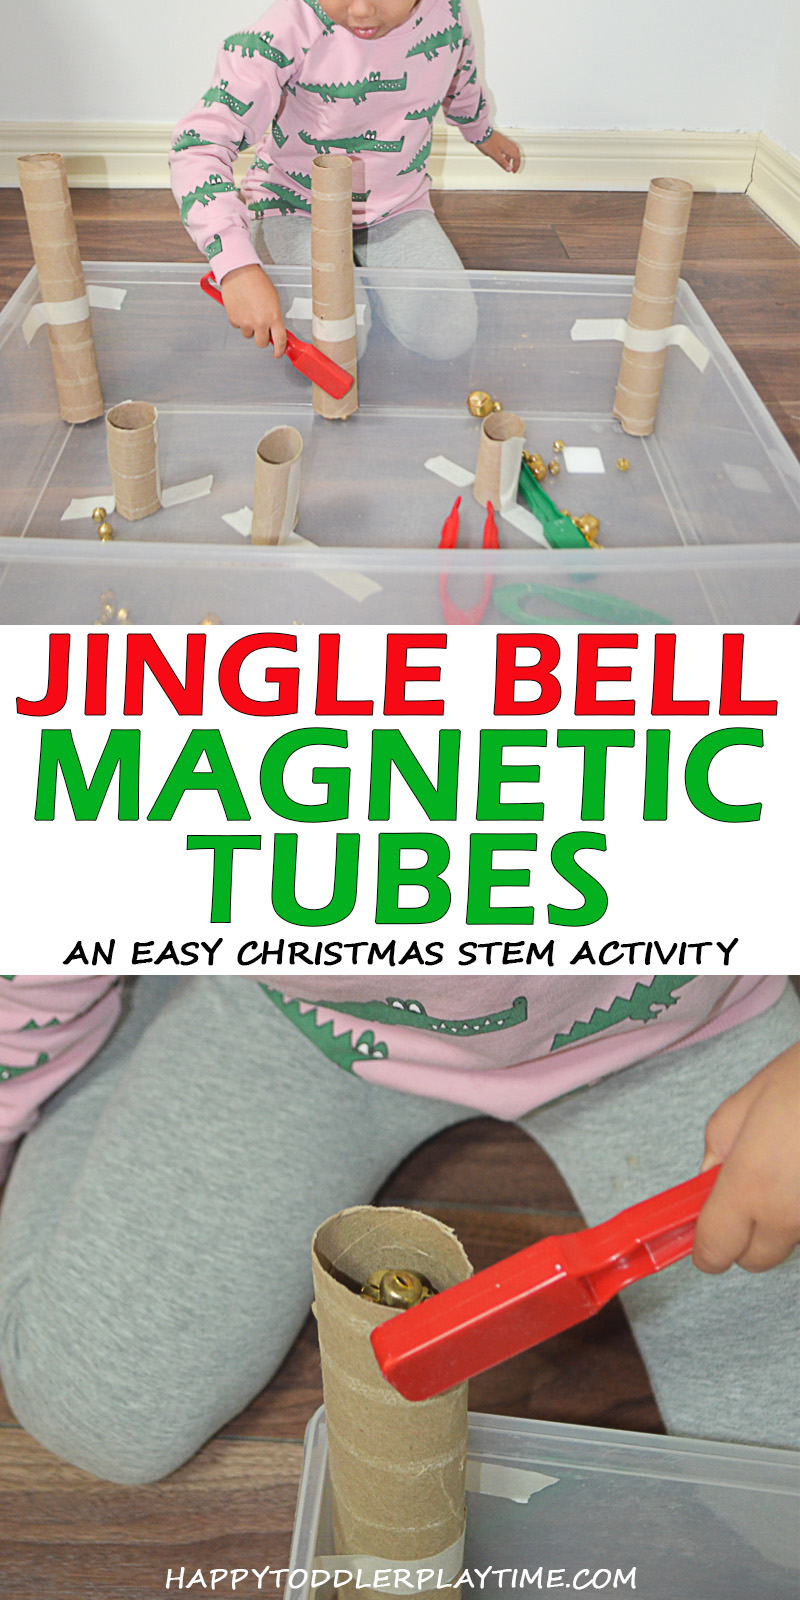 JINGLE BELL MAGNETIC TUBES pin.jpg